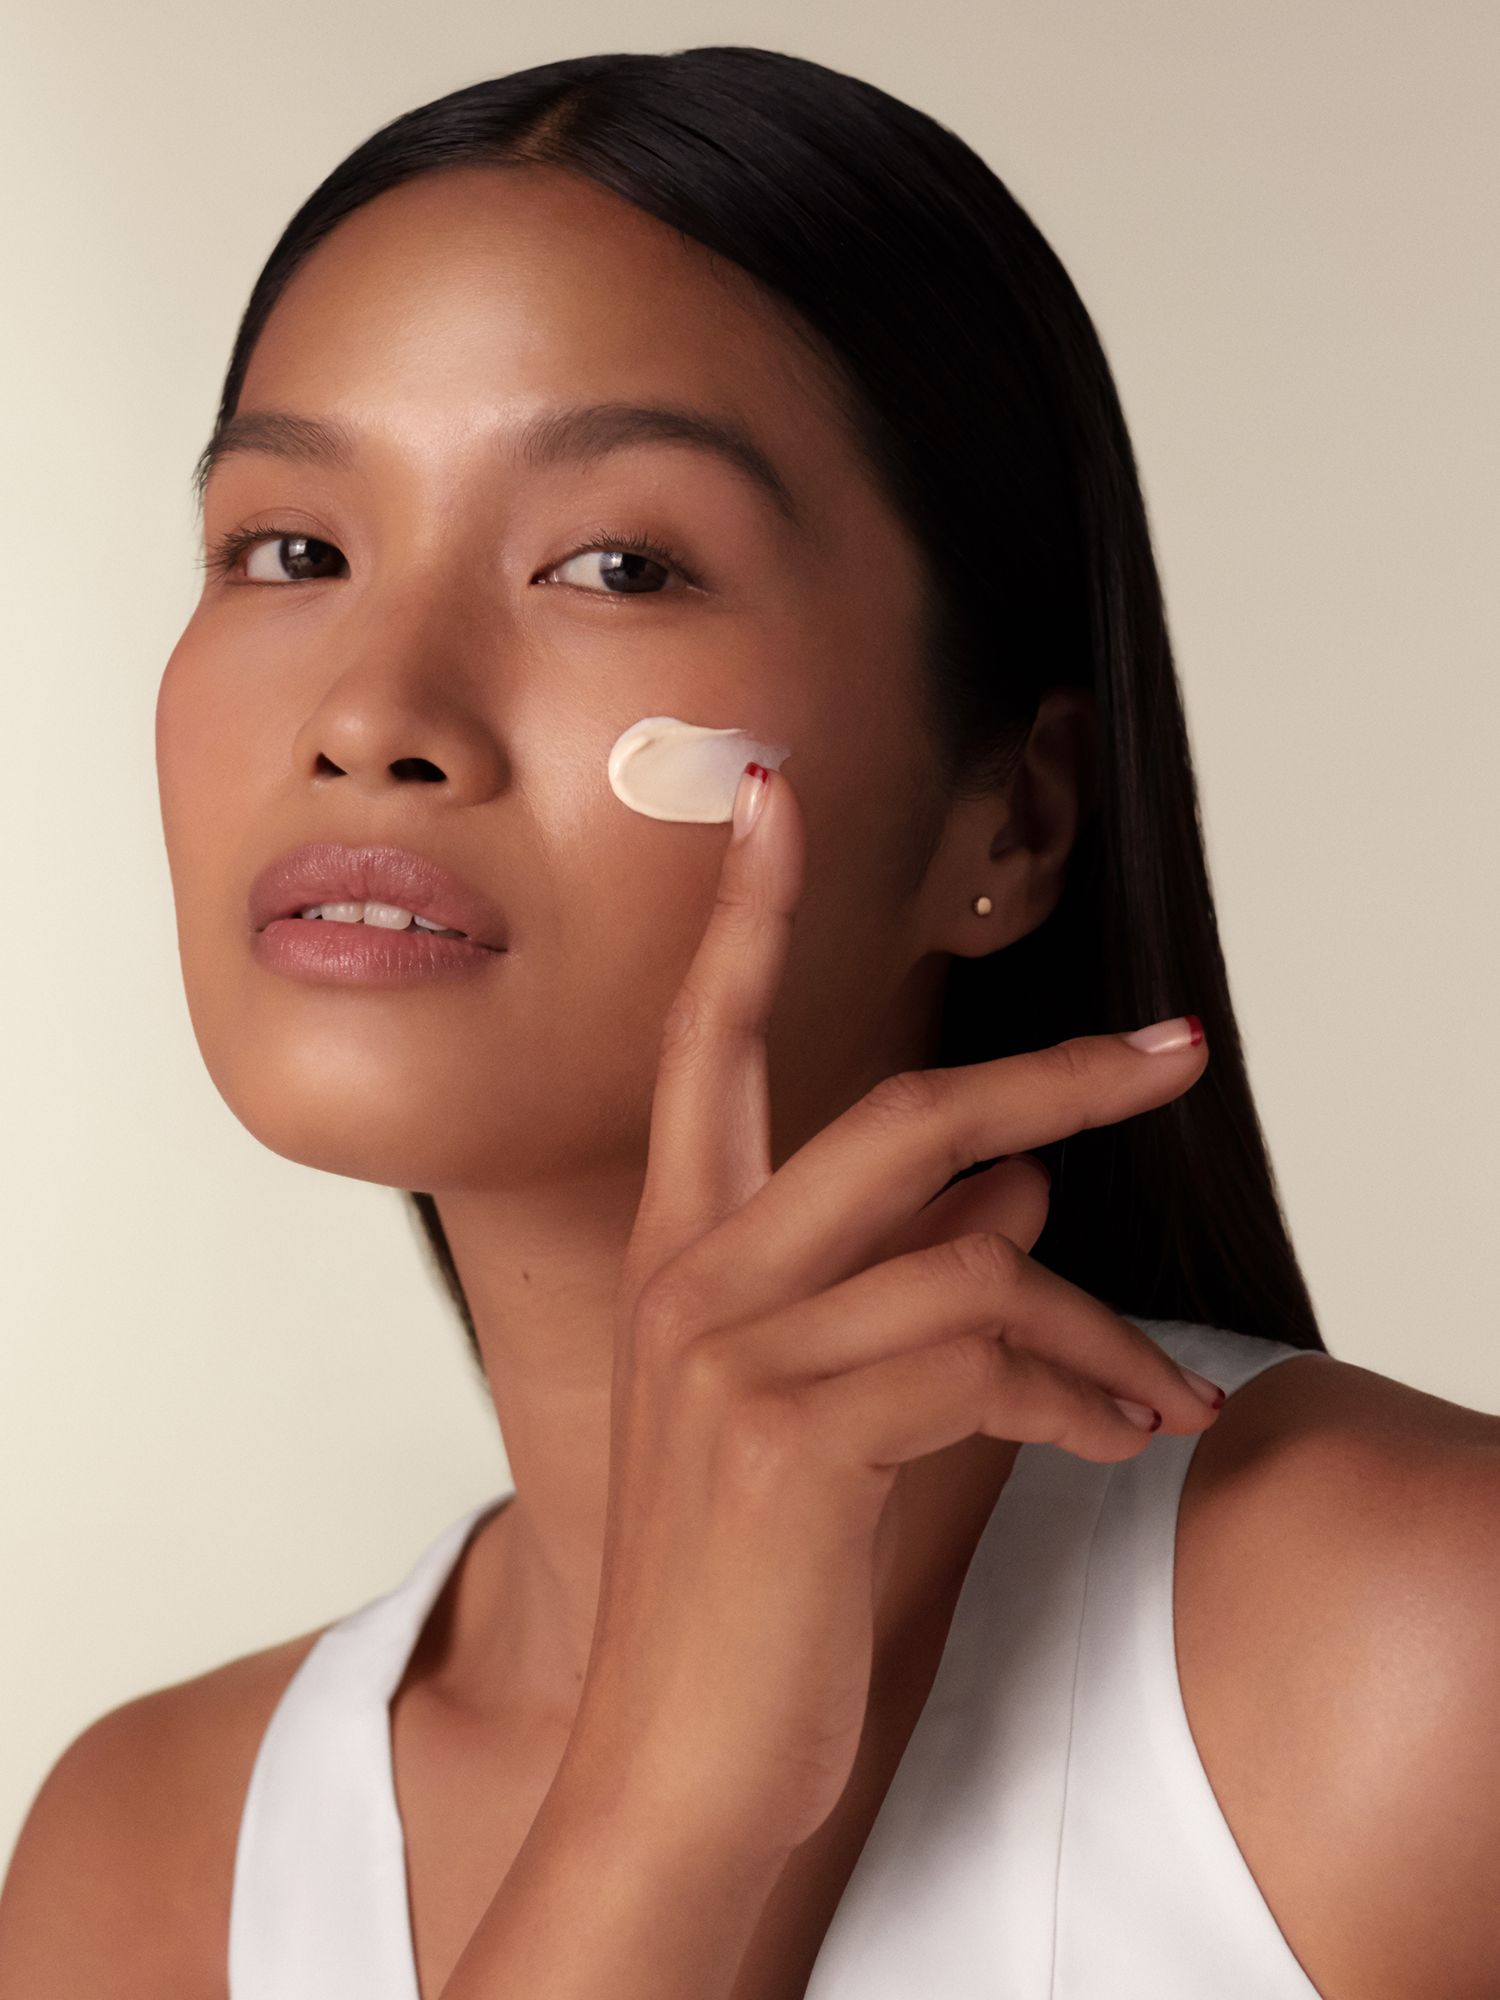 Shiseido Benefiance Wrinkle Smoothing Day Cream SPF 25, 50ml